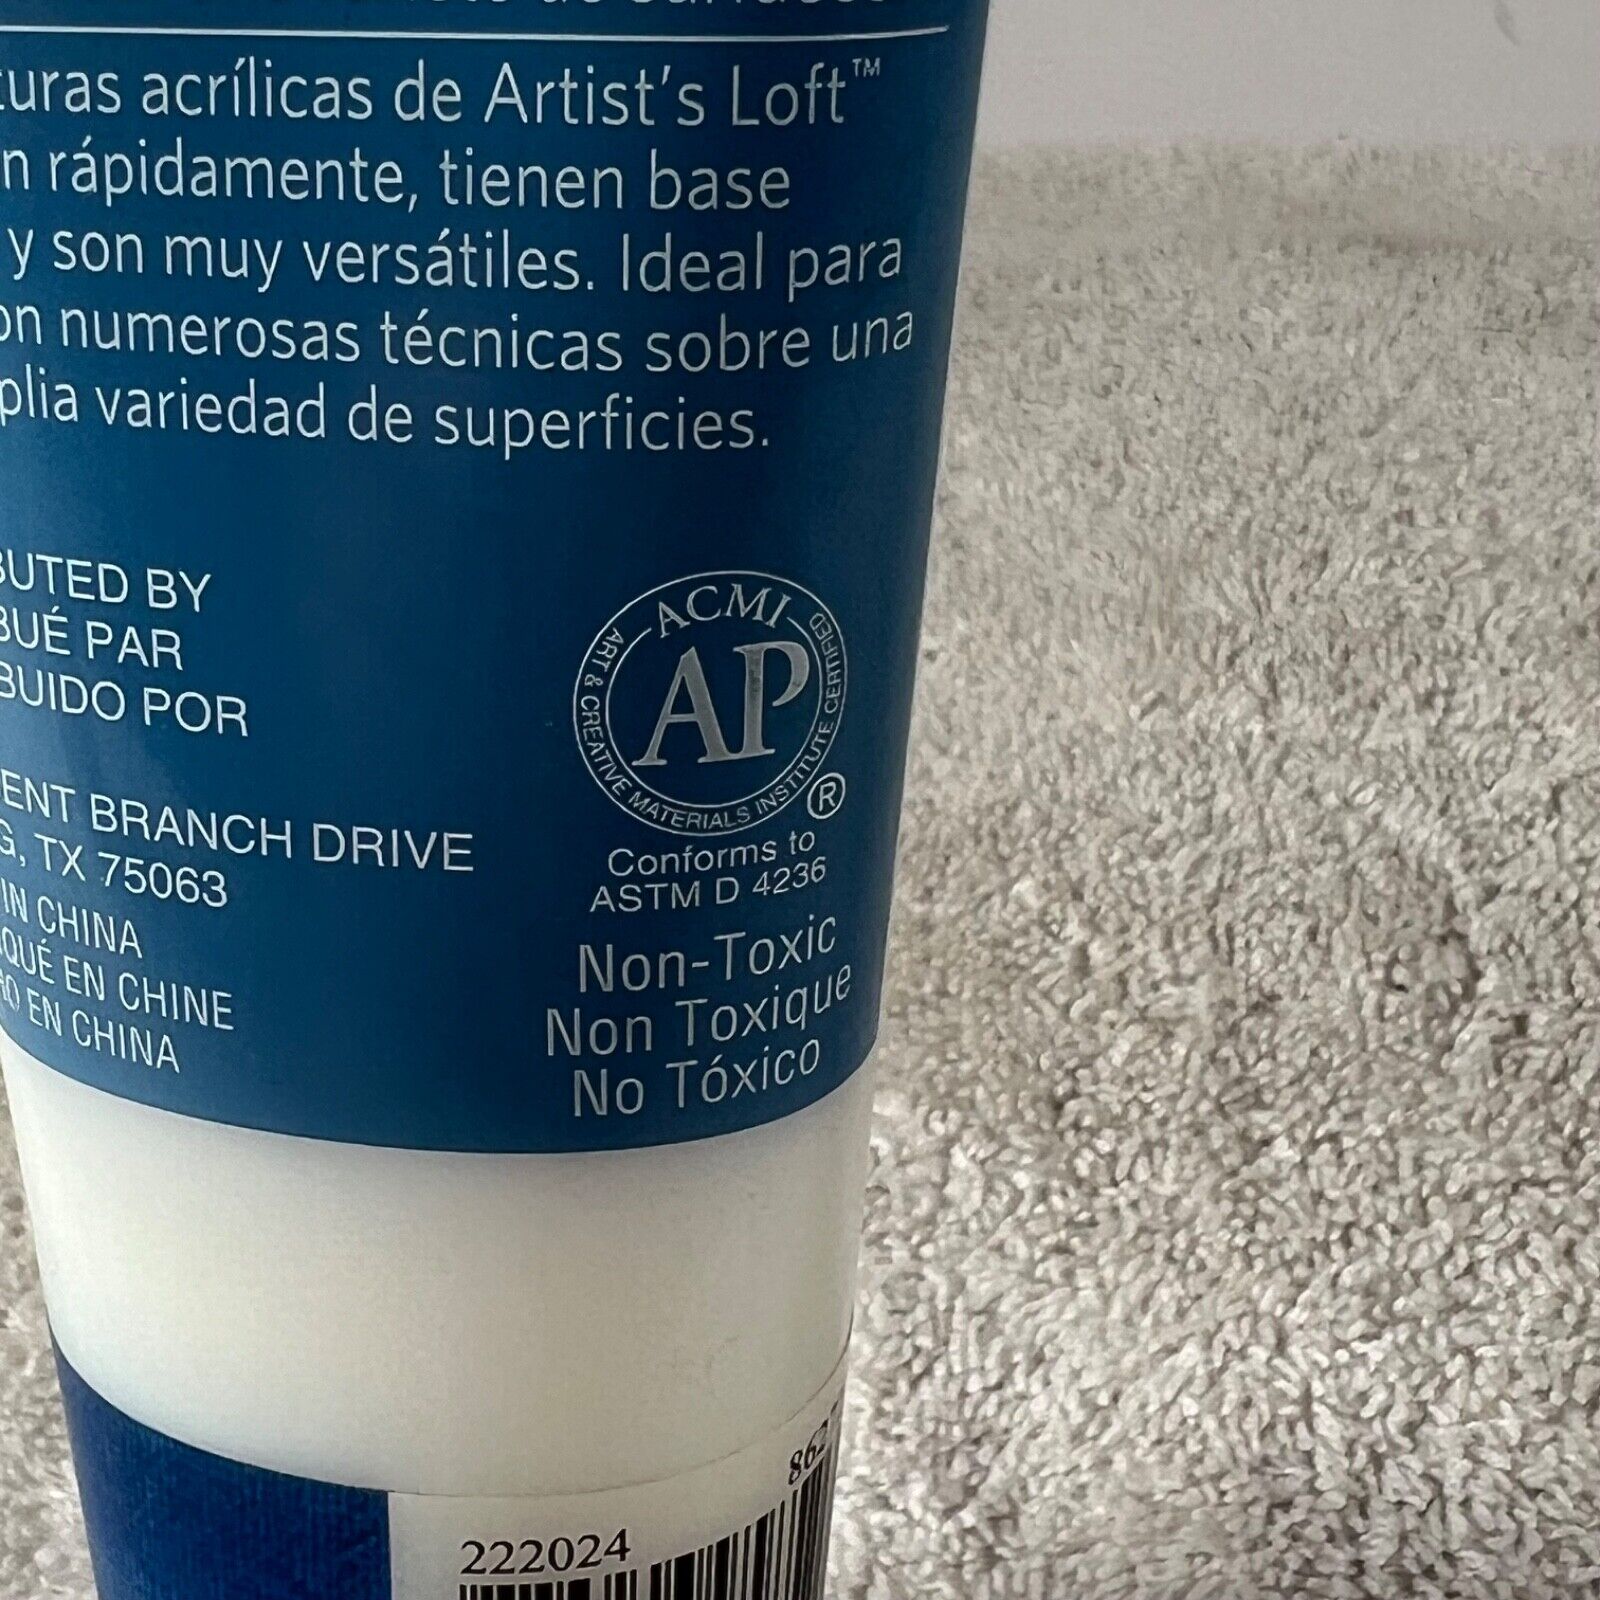 Artist’s Loft Acrylic Paint 2 Pack Titanium White and Slow Dry Blending Gel New